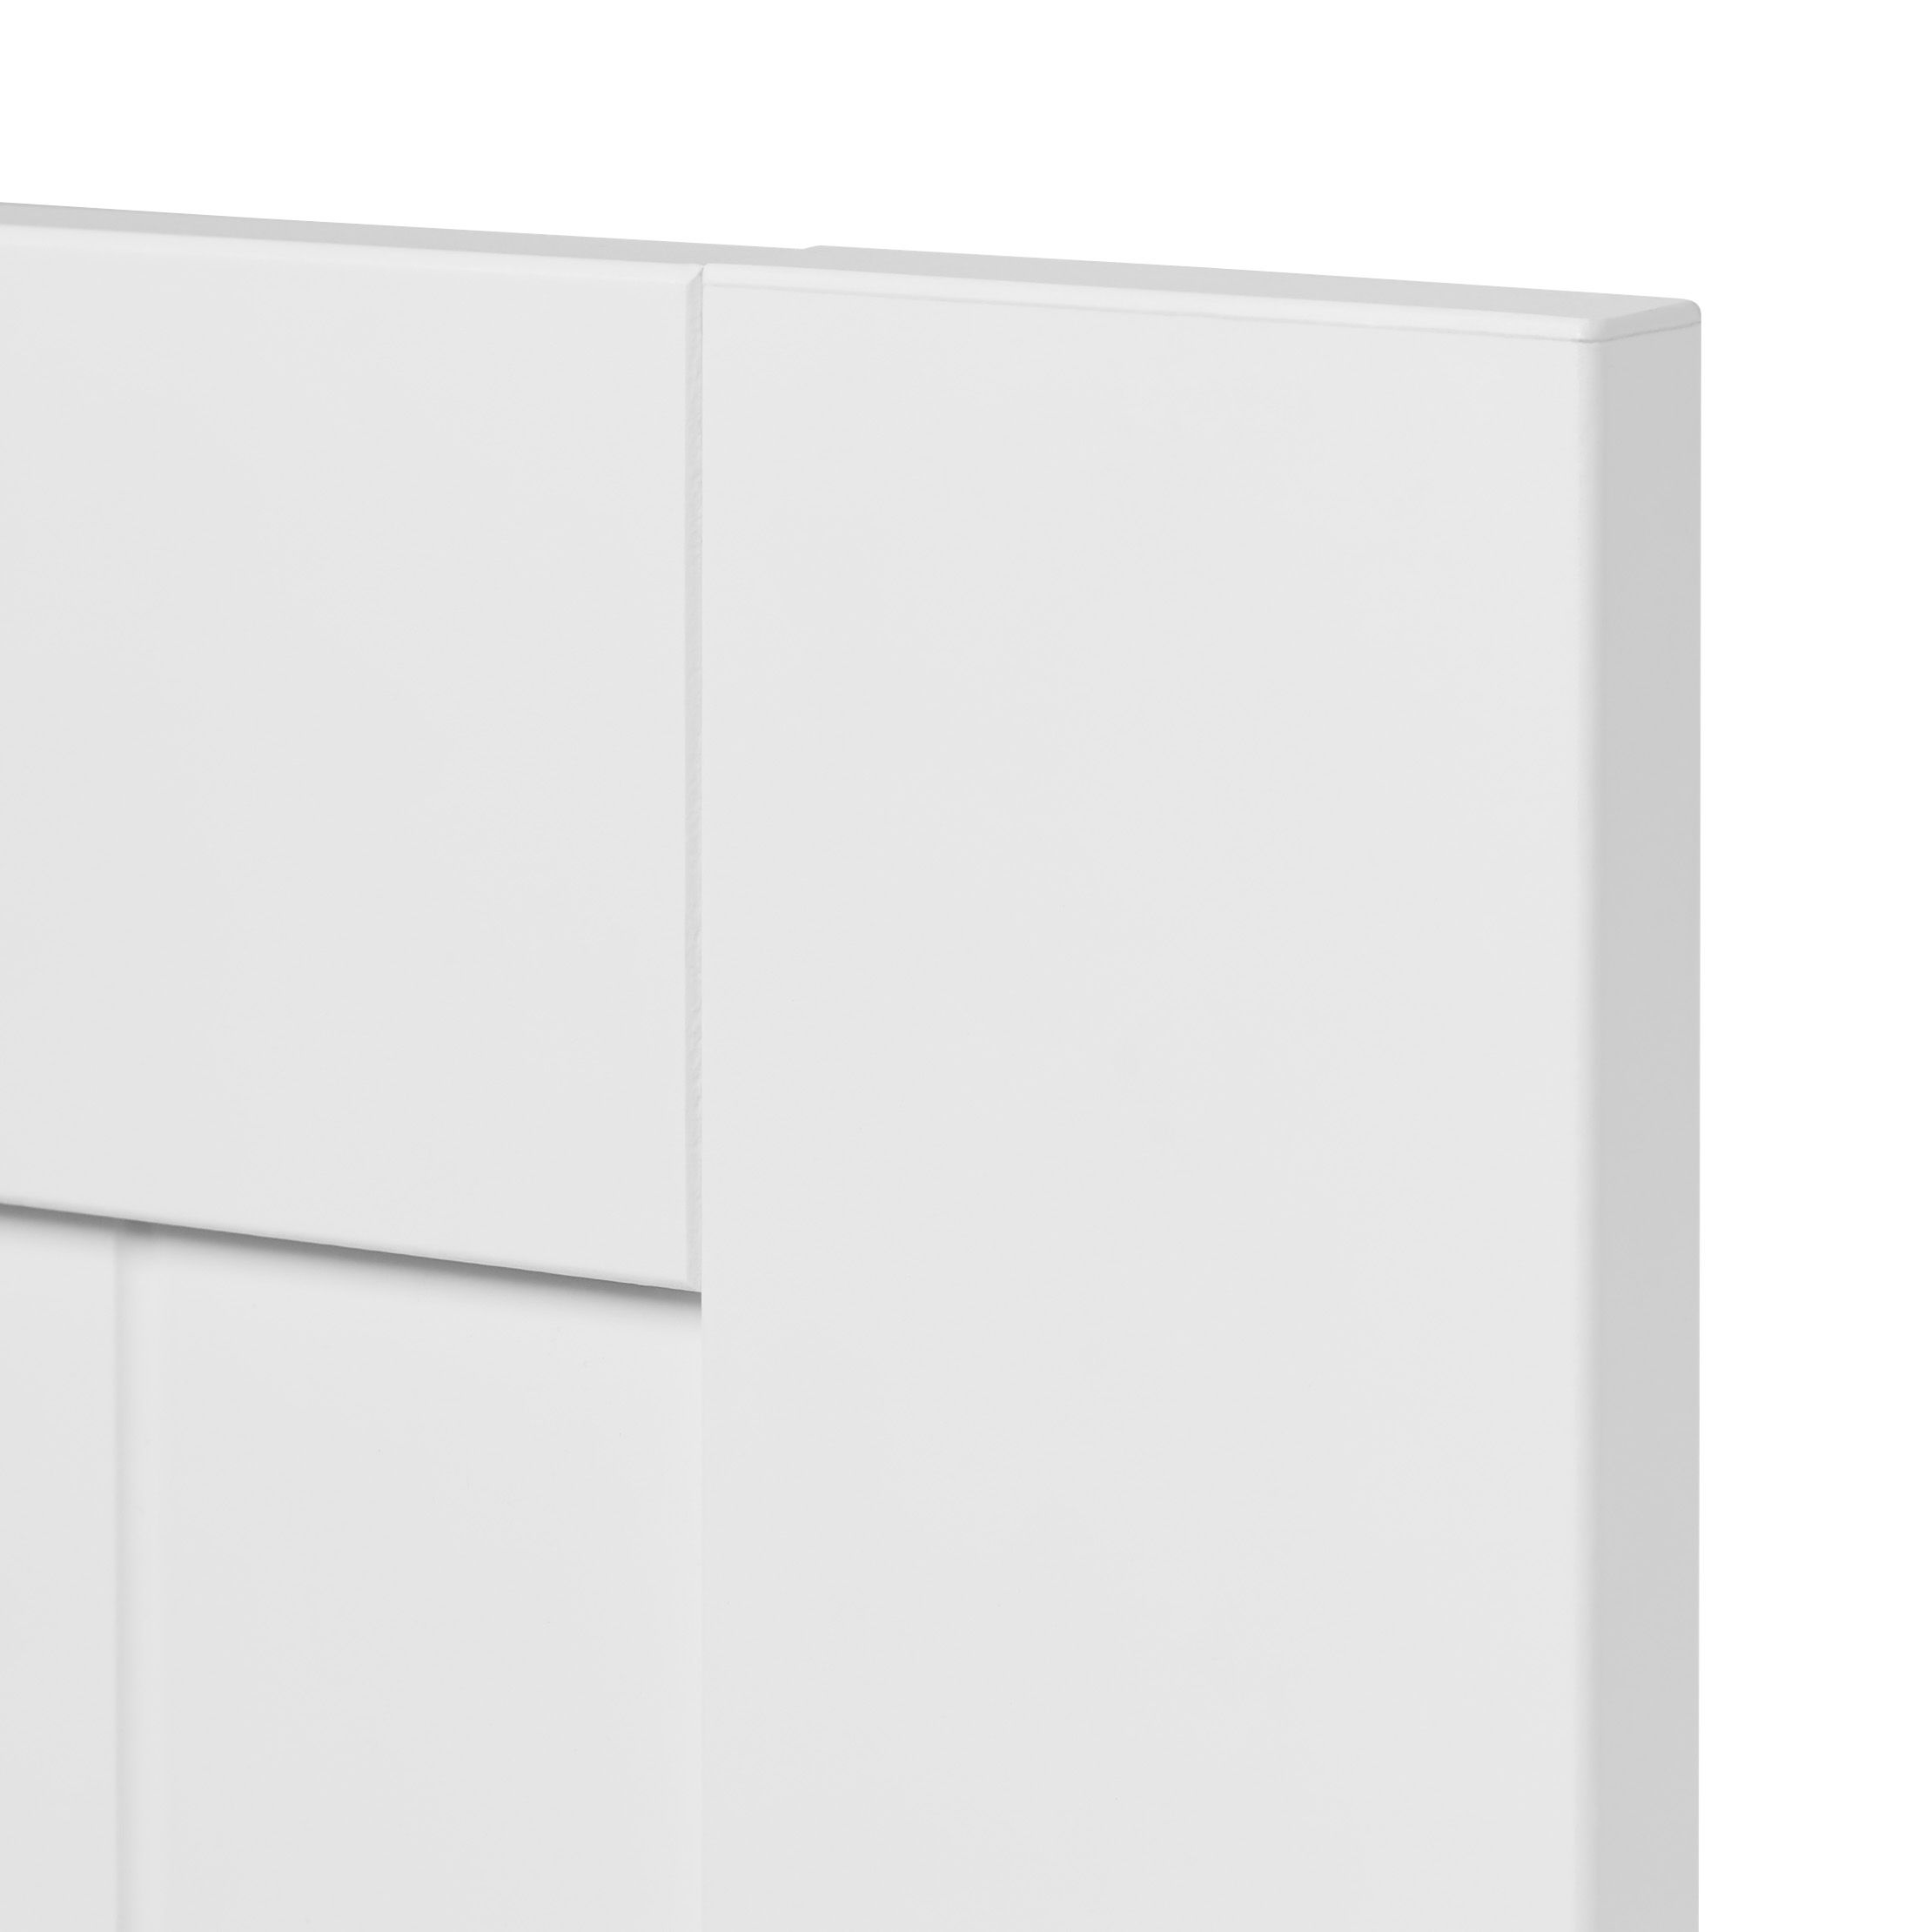 GoodHome Alpinia Matt white tongue & groove shaker Tall wall Cabinet door (W)300mm (H)895mm (T)18mm